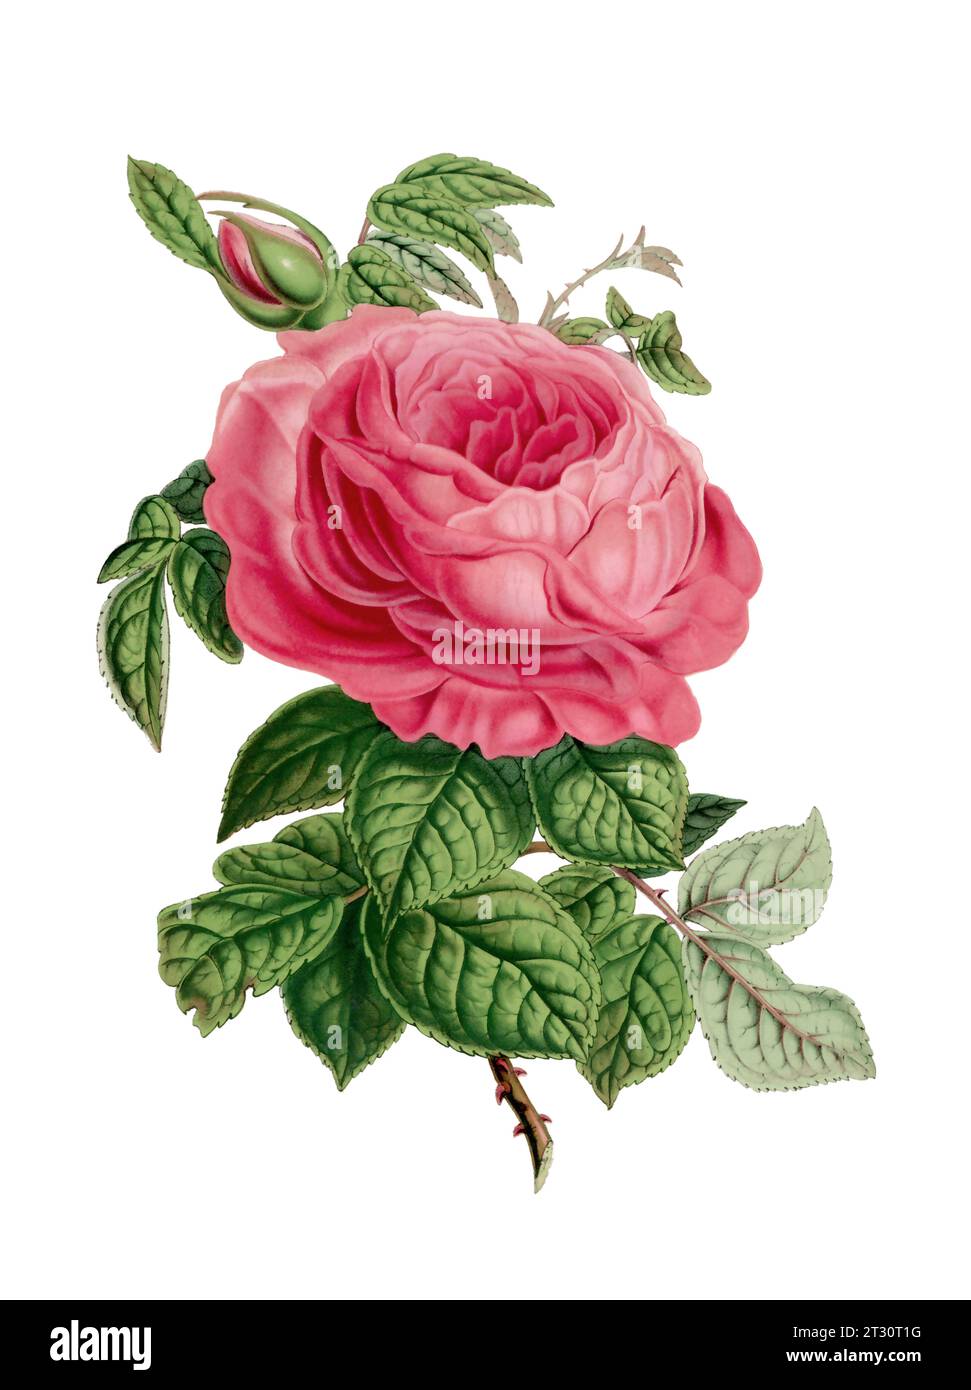 Colorful Rose Flower Illustration: A digital vintage-style flower on a plain white background. Stock Photo